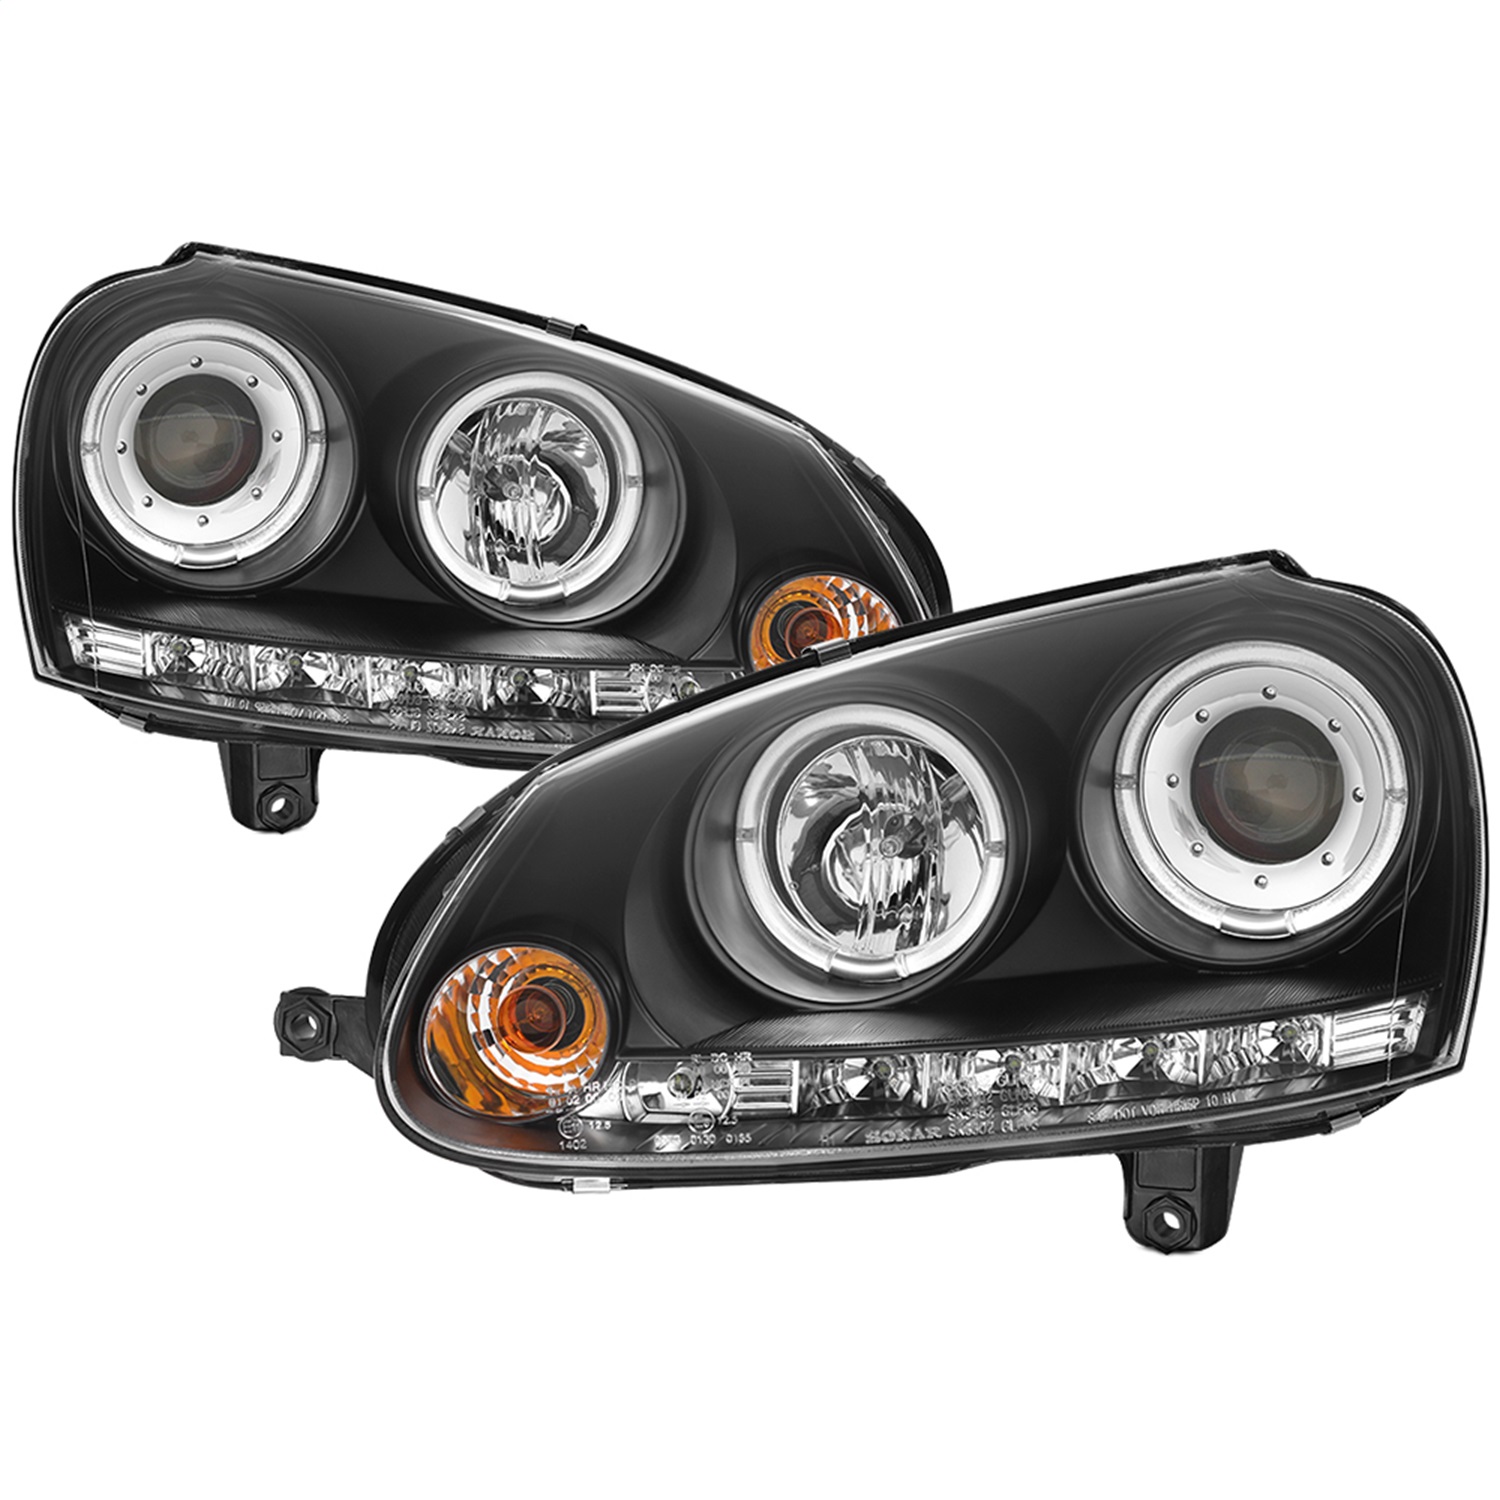 Spyder Auto 5012098 Halo LED Projector Headlights Fits 06-09 GTI Jetta Rabbit